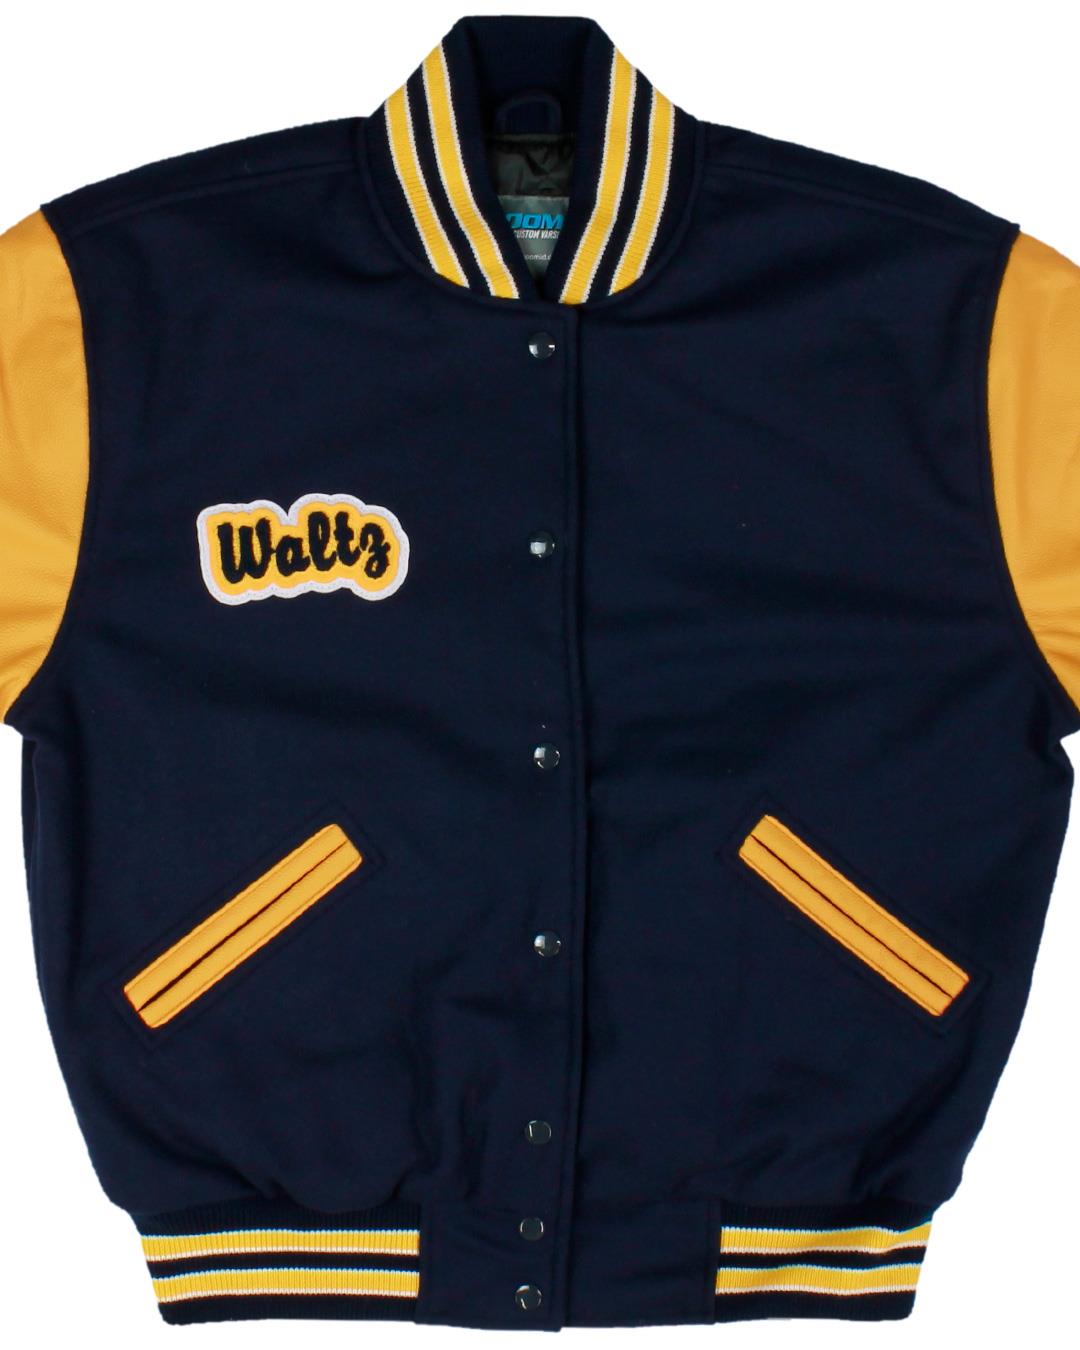 Fresta Valley Christian School Varsity Jacket, Marshall, VA - Front